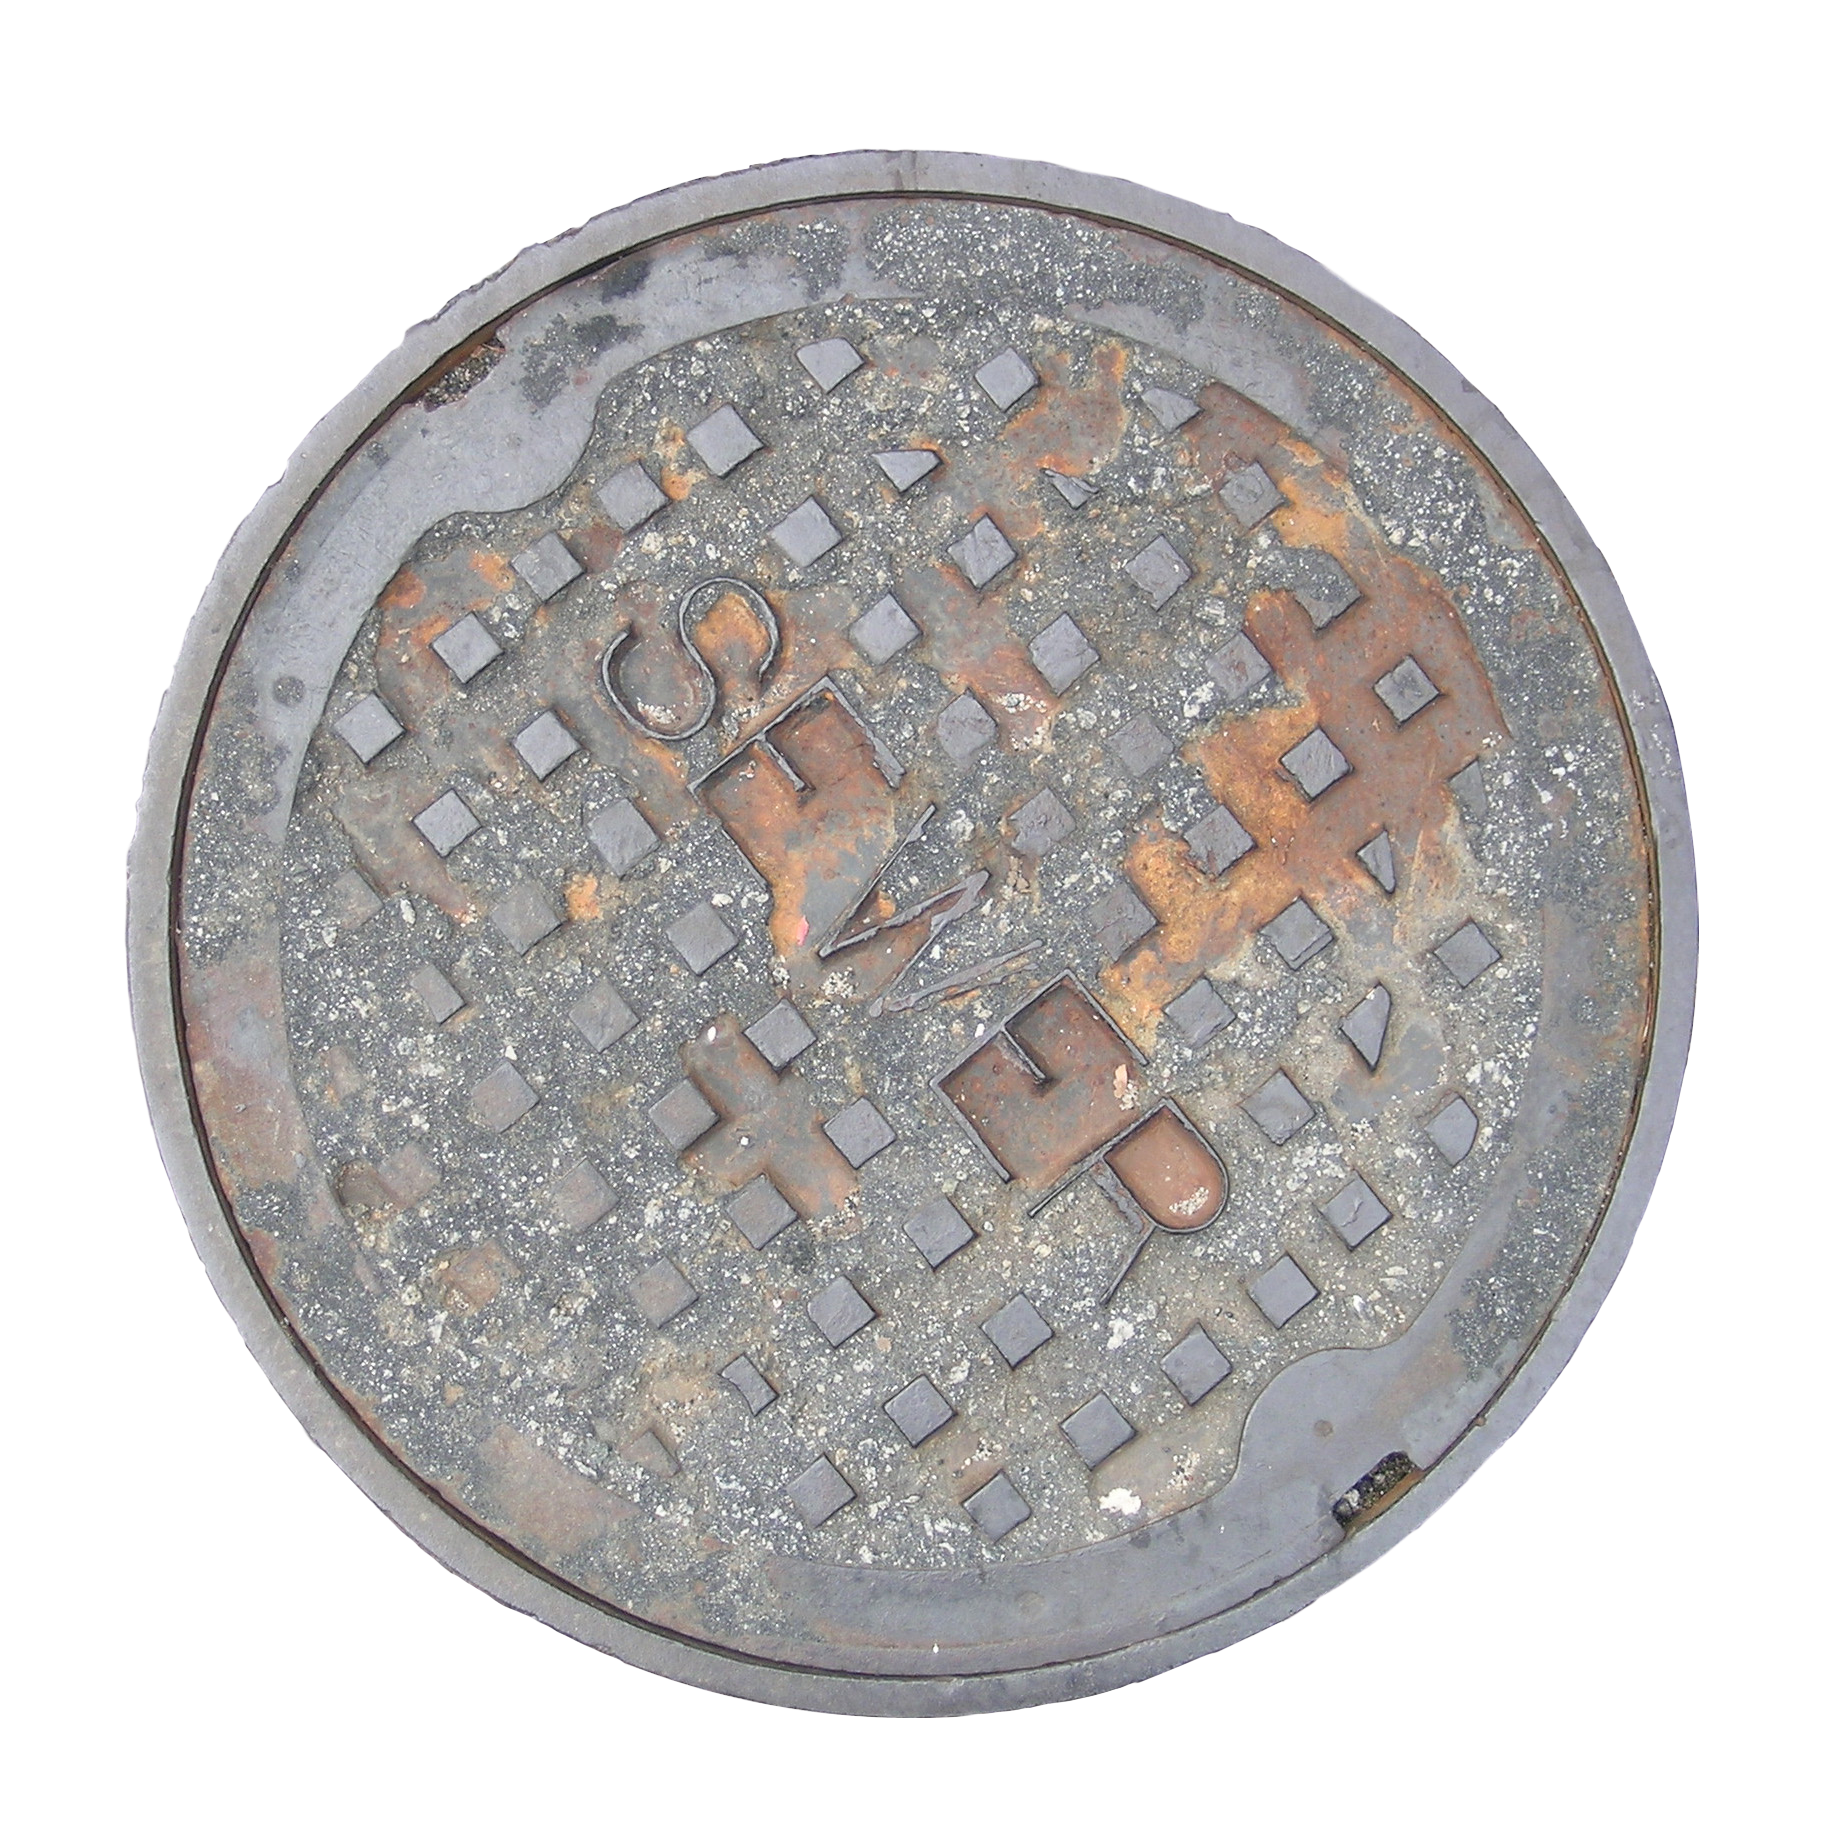 Канализационный люк текстура. Manhole 3d. Sewer texture. Manhole texture. Huge round